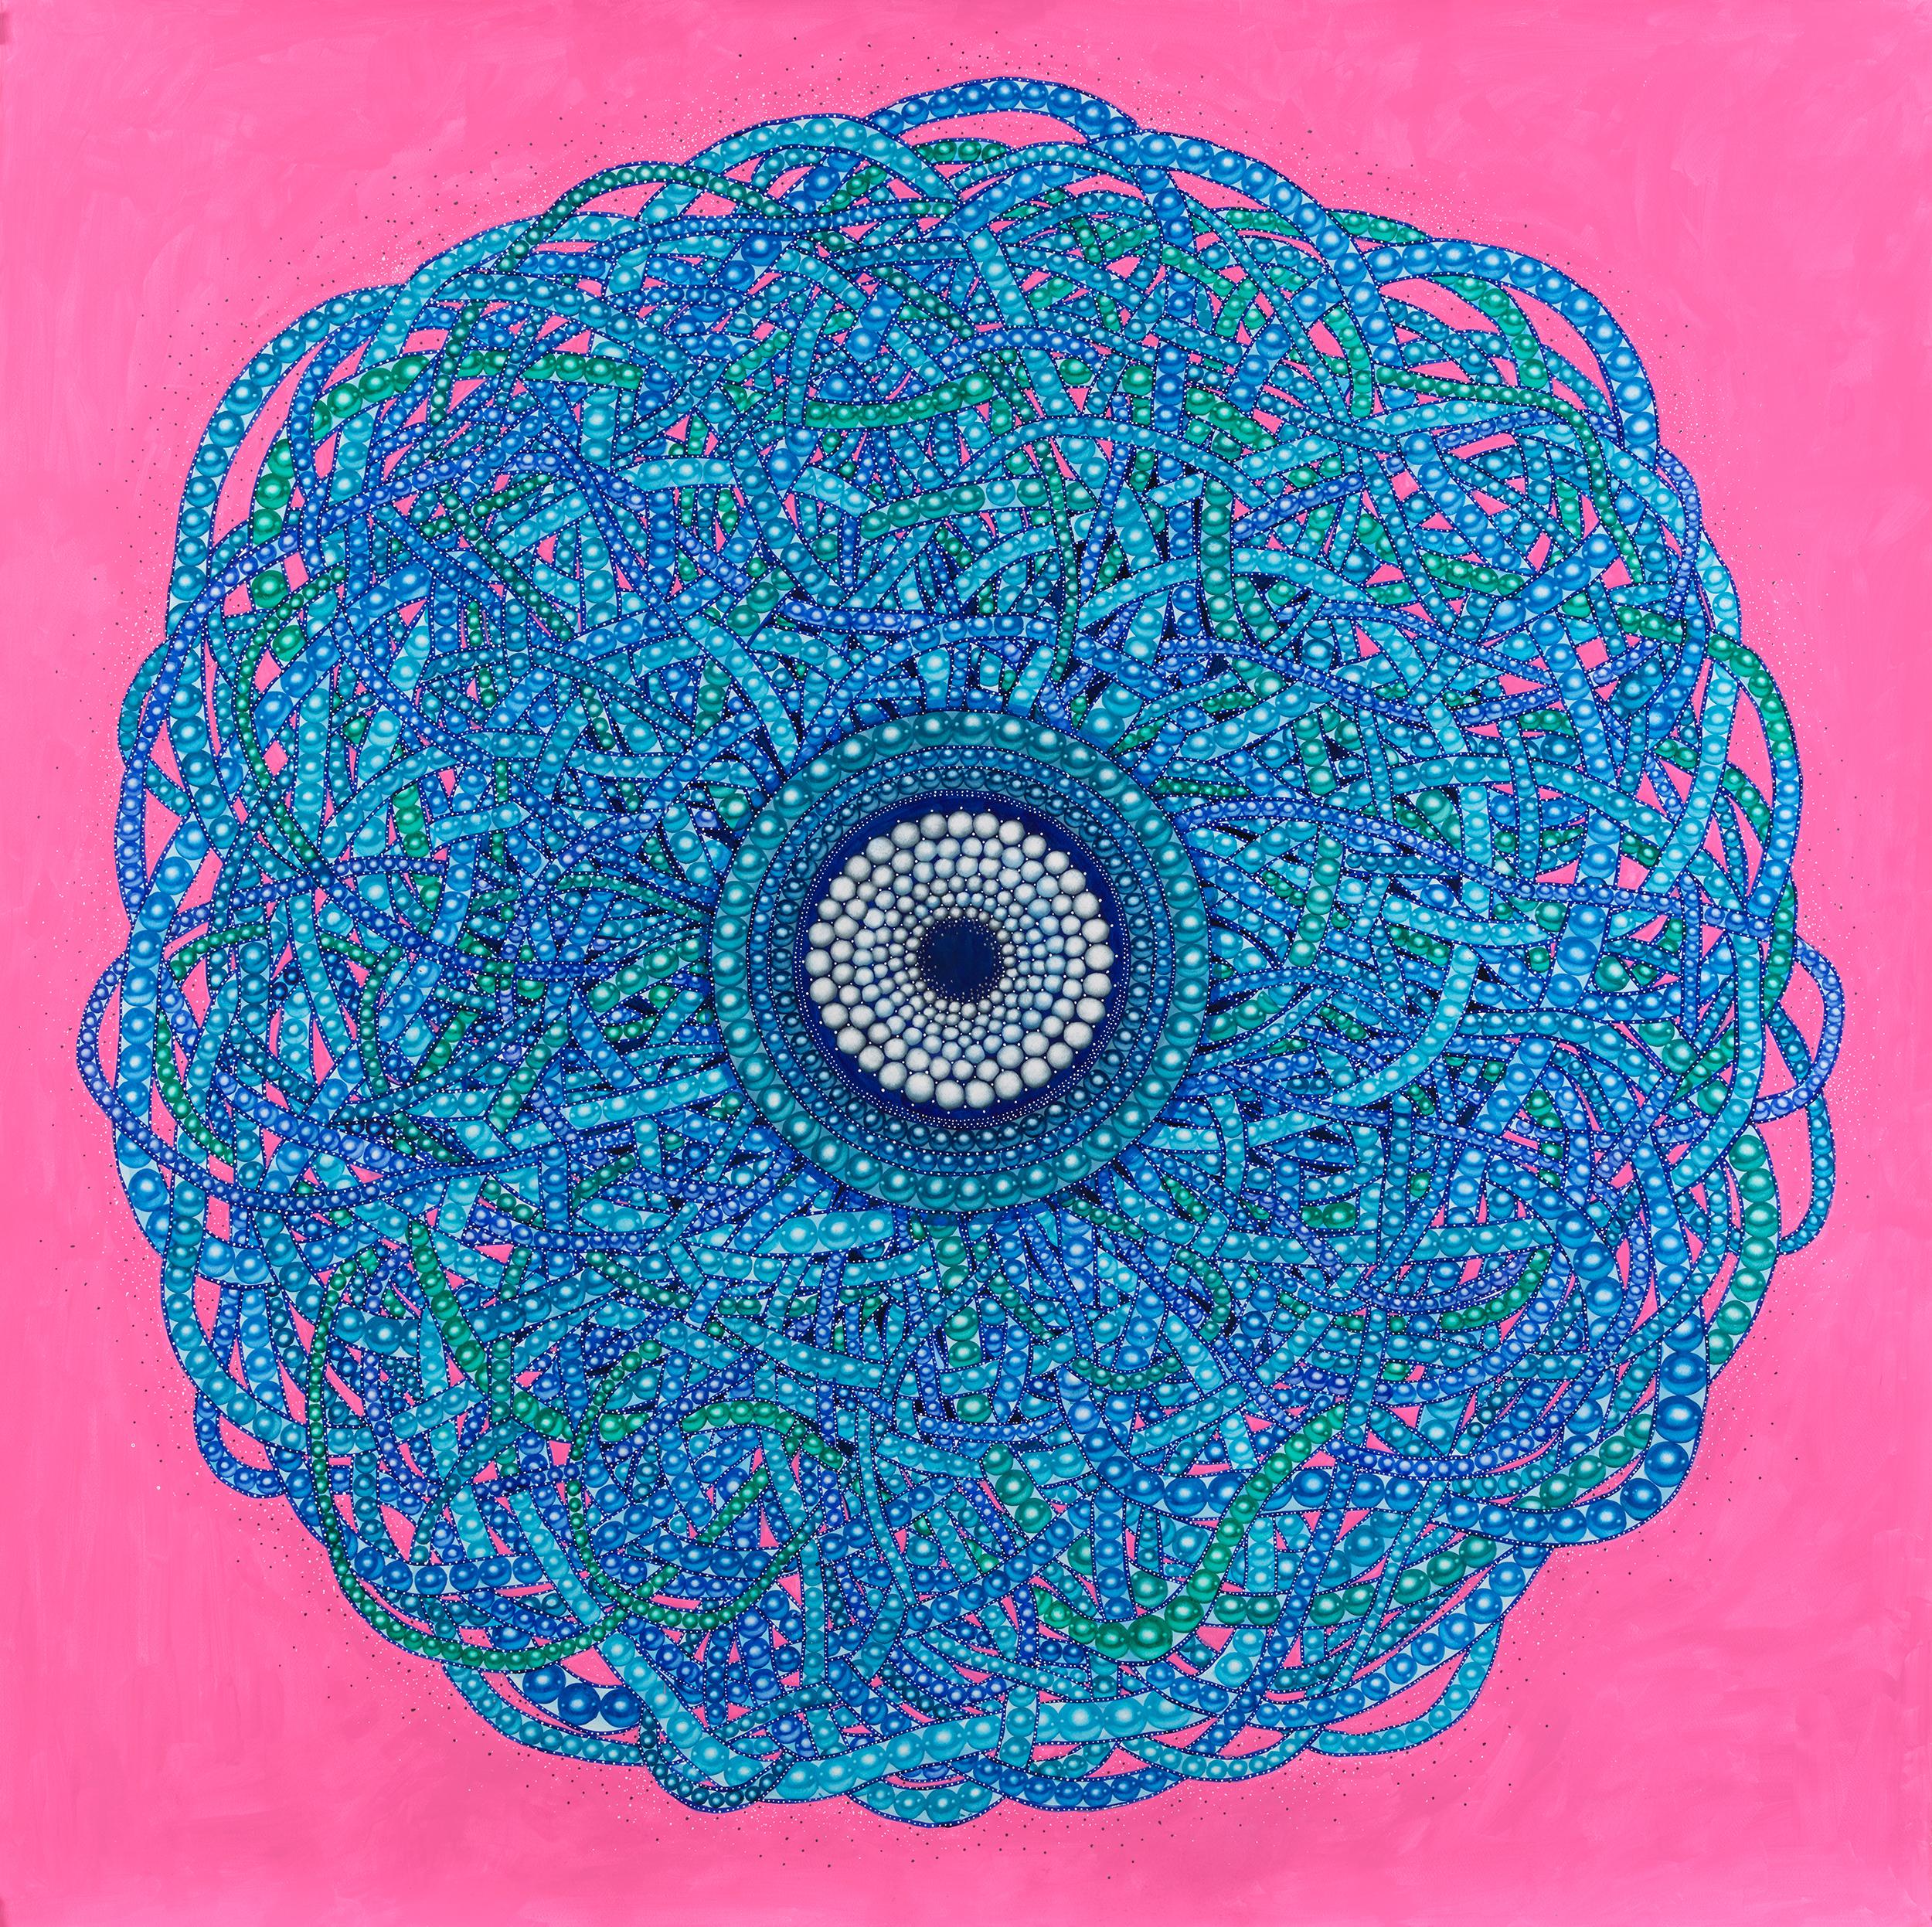 Sky Kim Abstract Painting - Spiraling Strands of Human DNA (Portal Series)